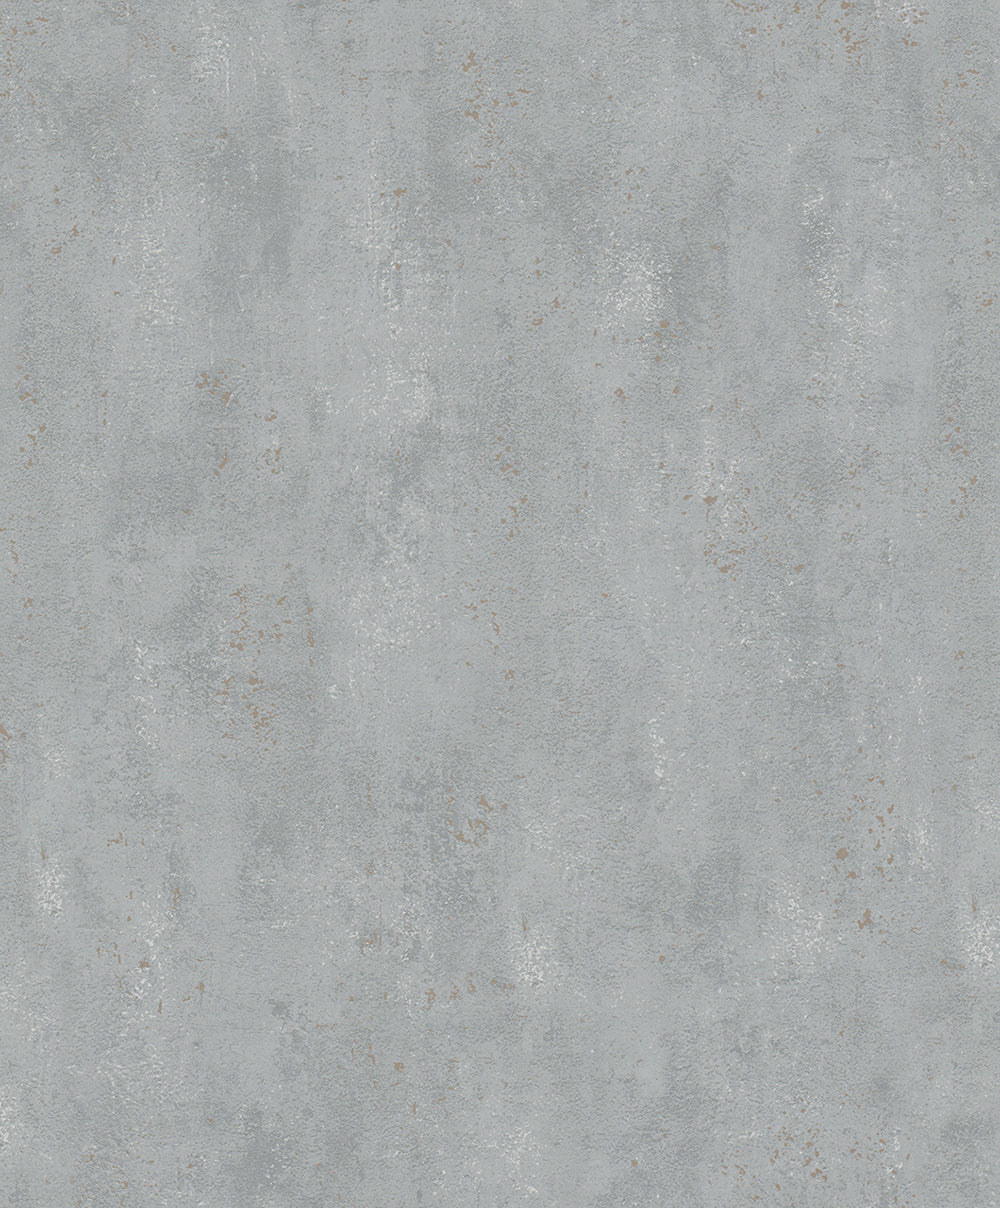 City Glam - Concrete plain wallpaper Marburg Roll Grey  32615